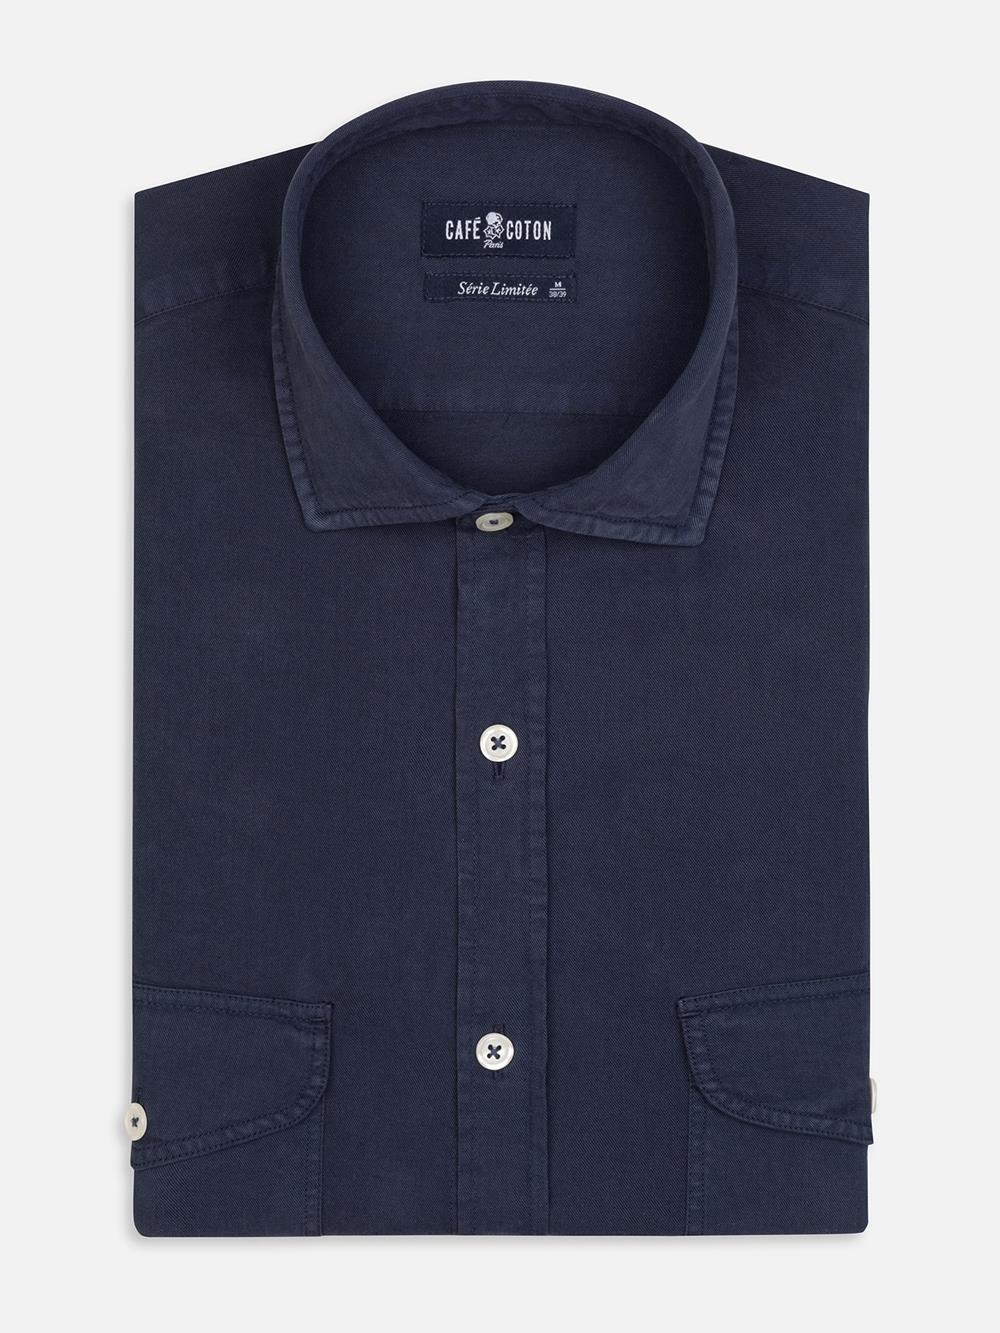 Scali shirt in navy gabardine - Limited edition